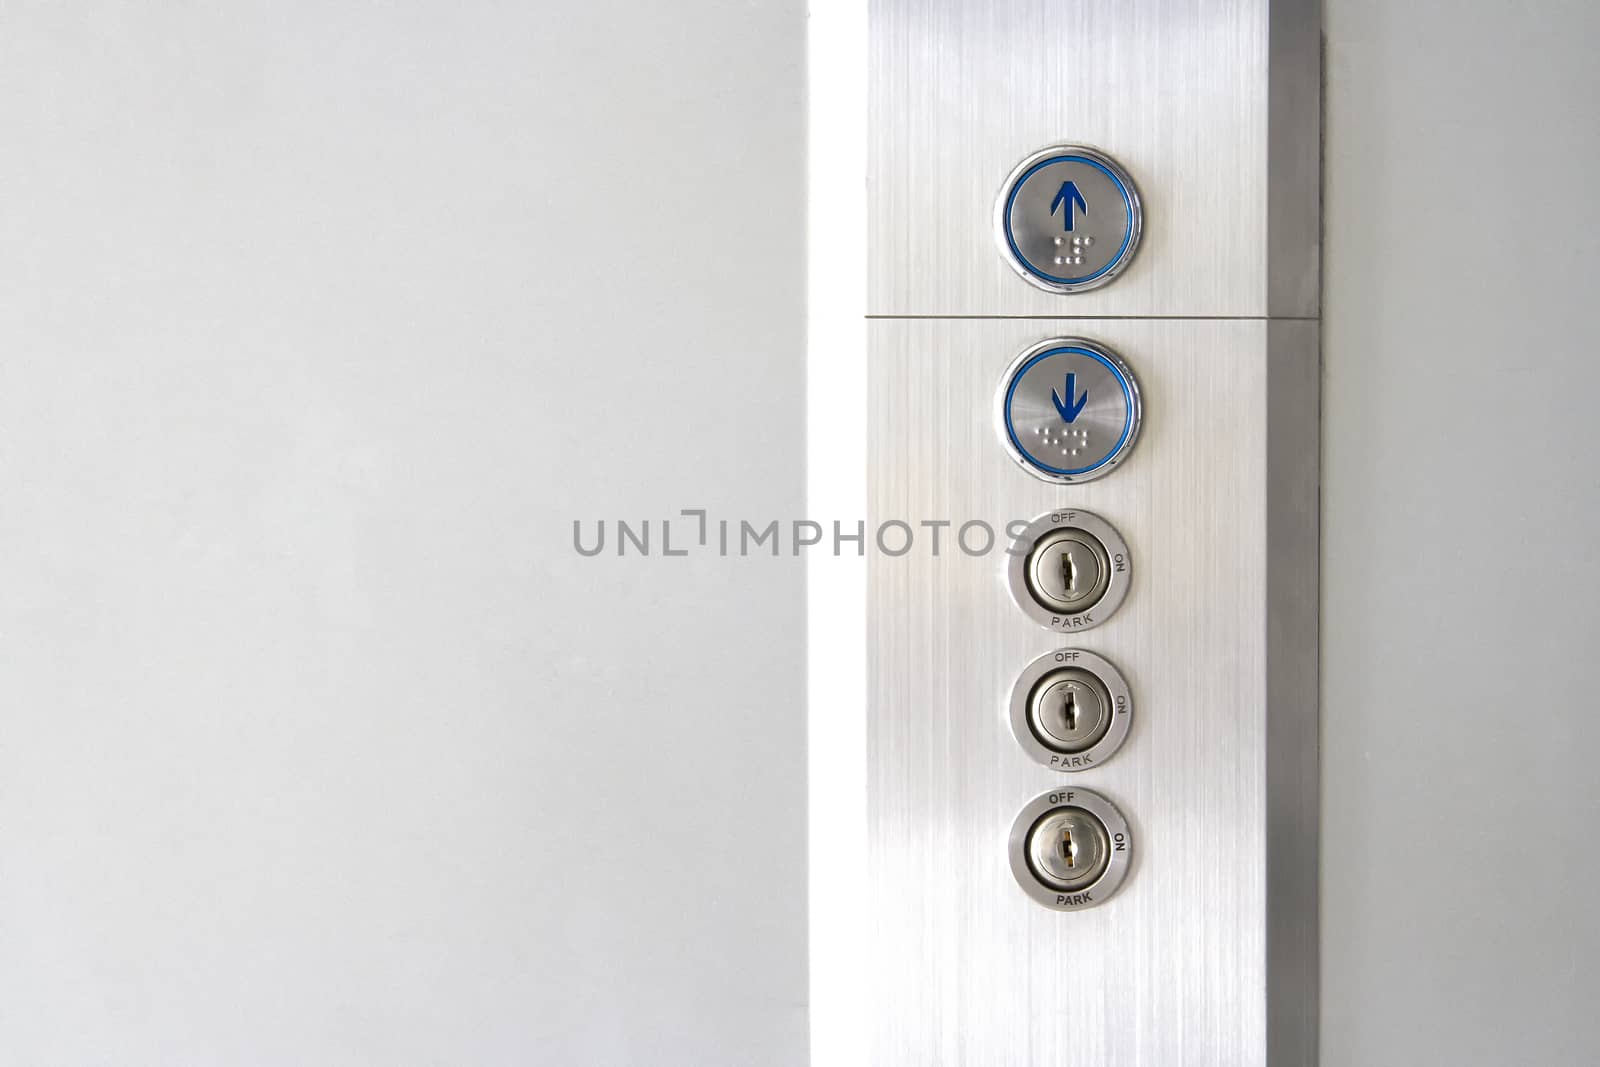 Press the elevator up and keypad elevator  by TakerWalker